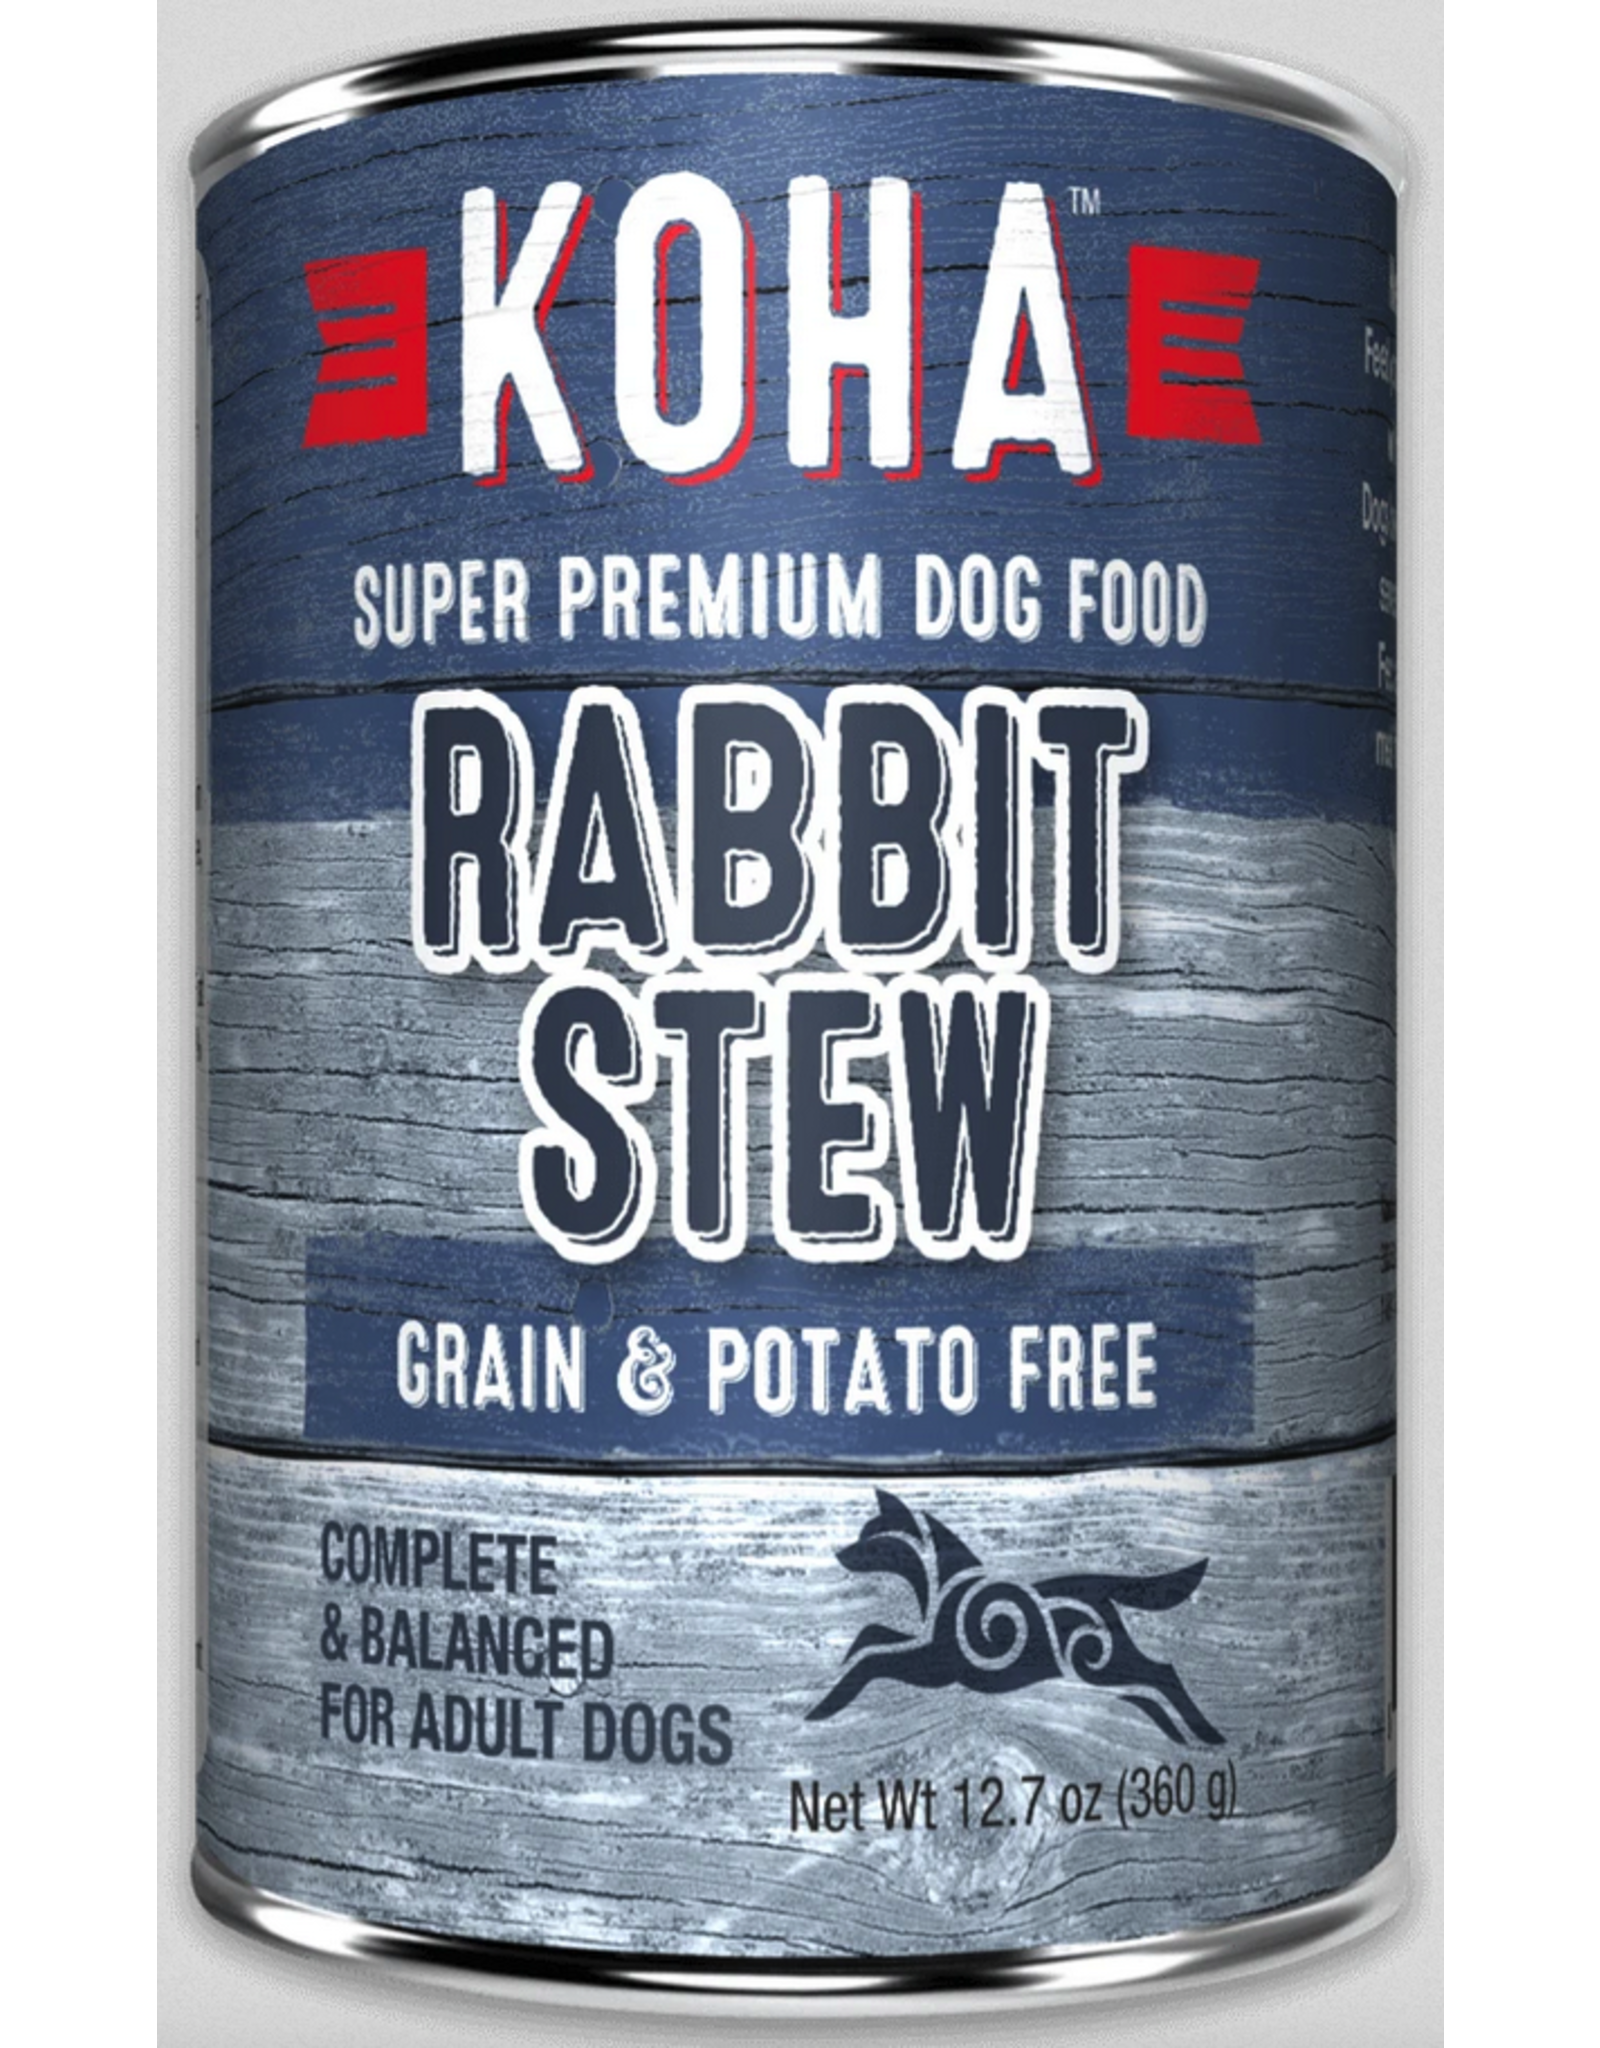 Koha Pet Koha Dog Rabbit Stew 12.7oz